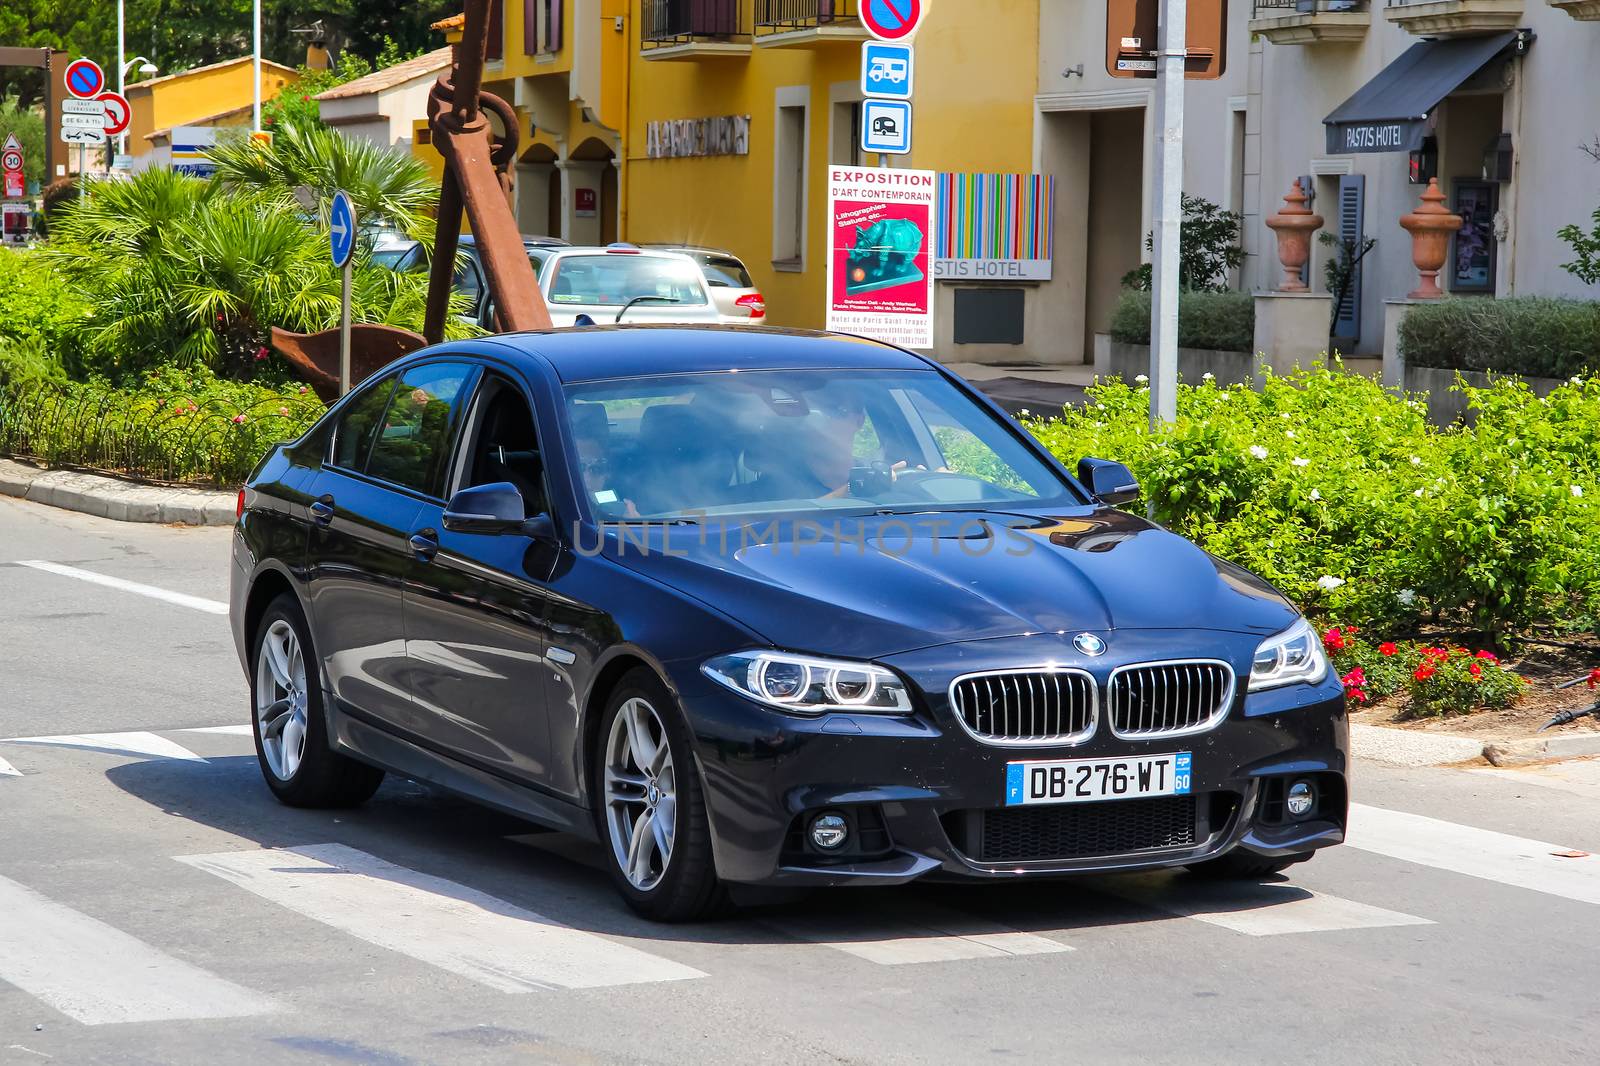 SAINT-TROPEZ, FRANCE - AUGUST 3, 2014: Motor car BMW F10 5-series at the city street.